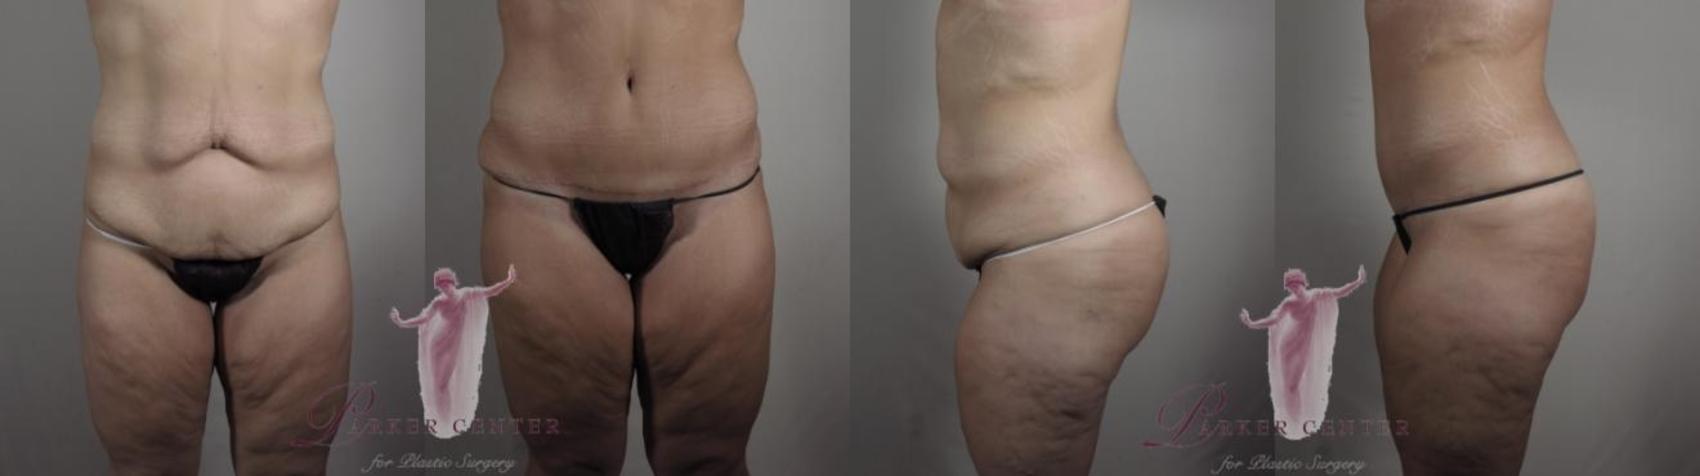 Tummy Tuck Case 1121 Before & After Front | Paramus, NJ | Parker Center for Plastic Surgery